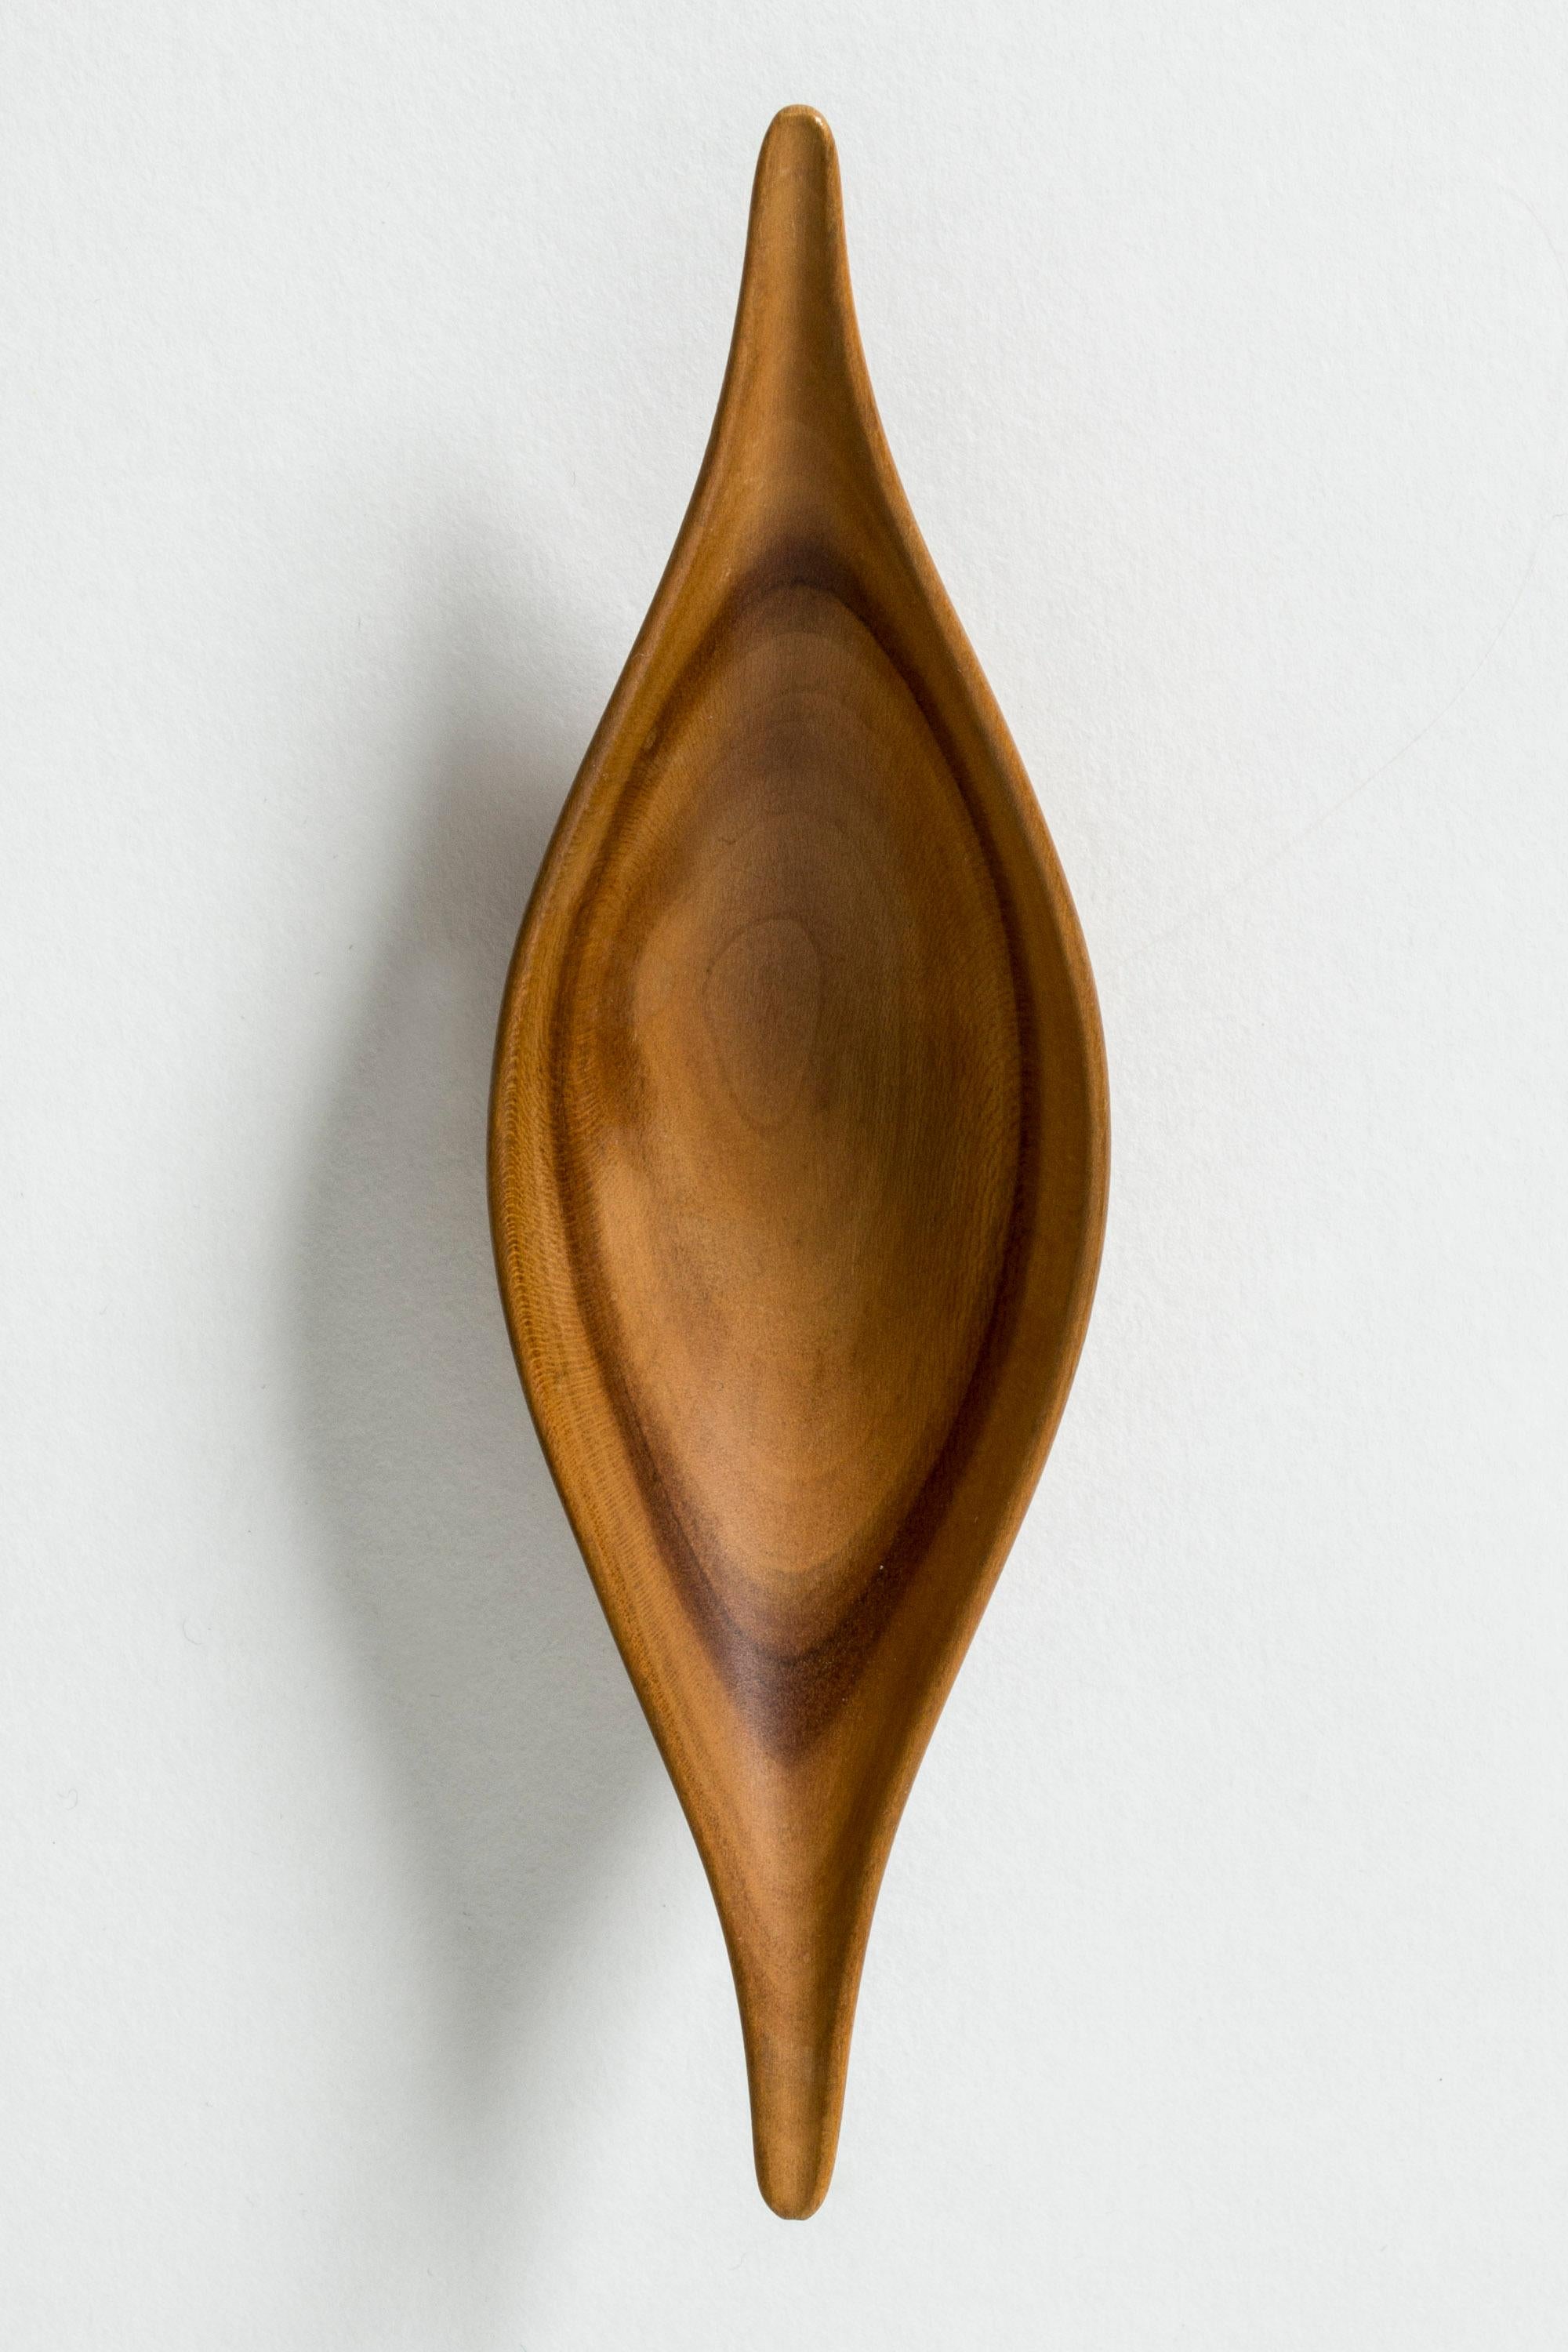 Swedish Midcentury wooden bowl by Johnny Mattsson, Sweden, 1950s